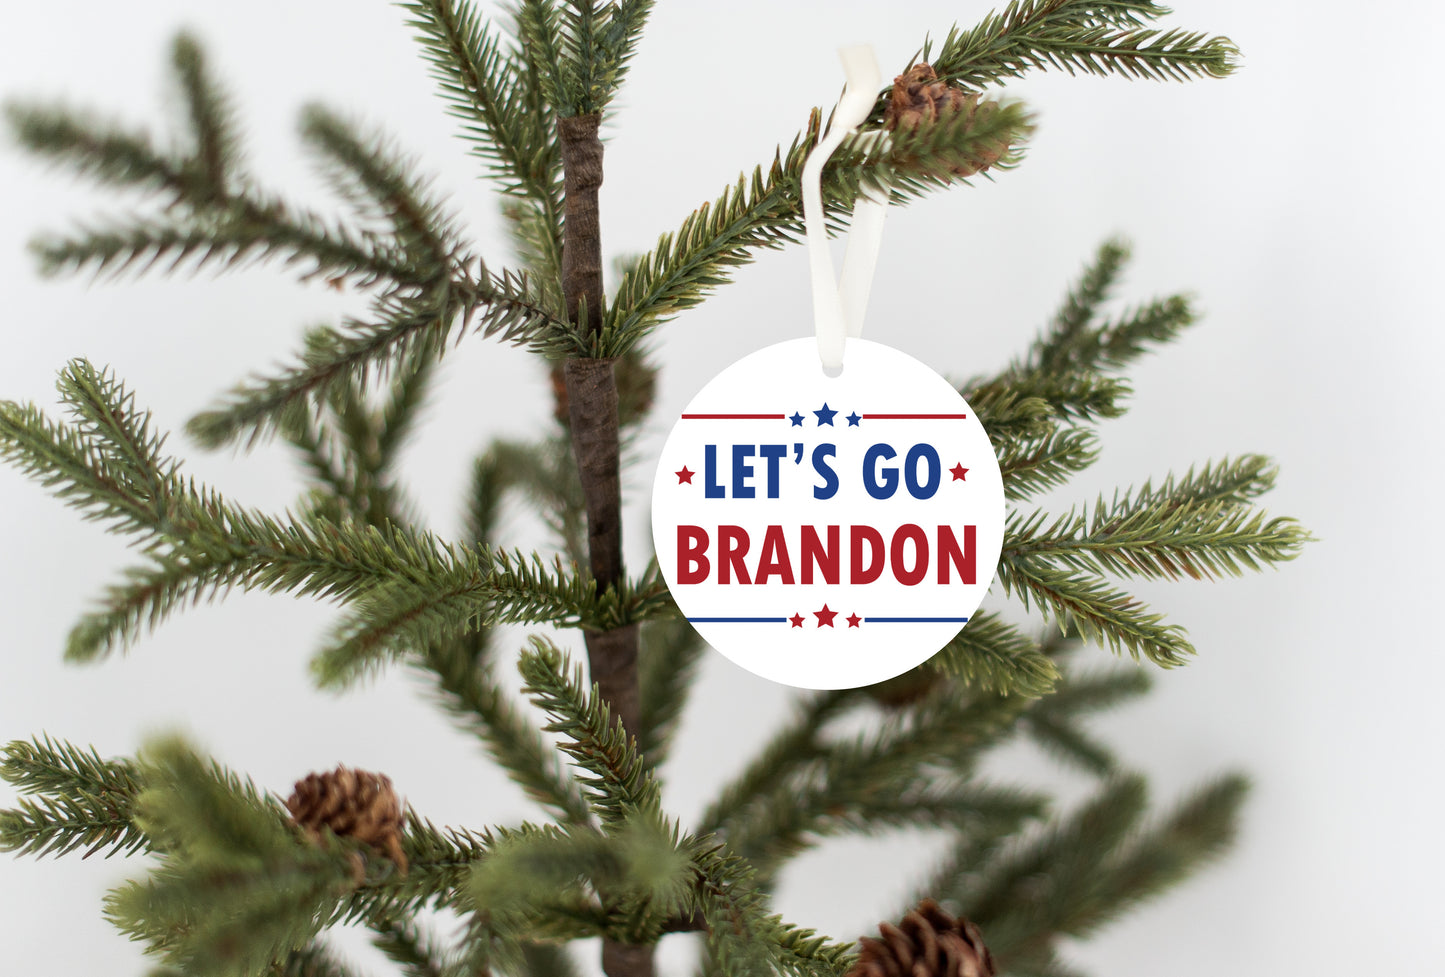 Let's Go Brandon Ornament